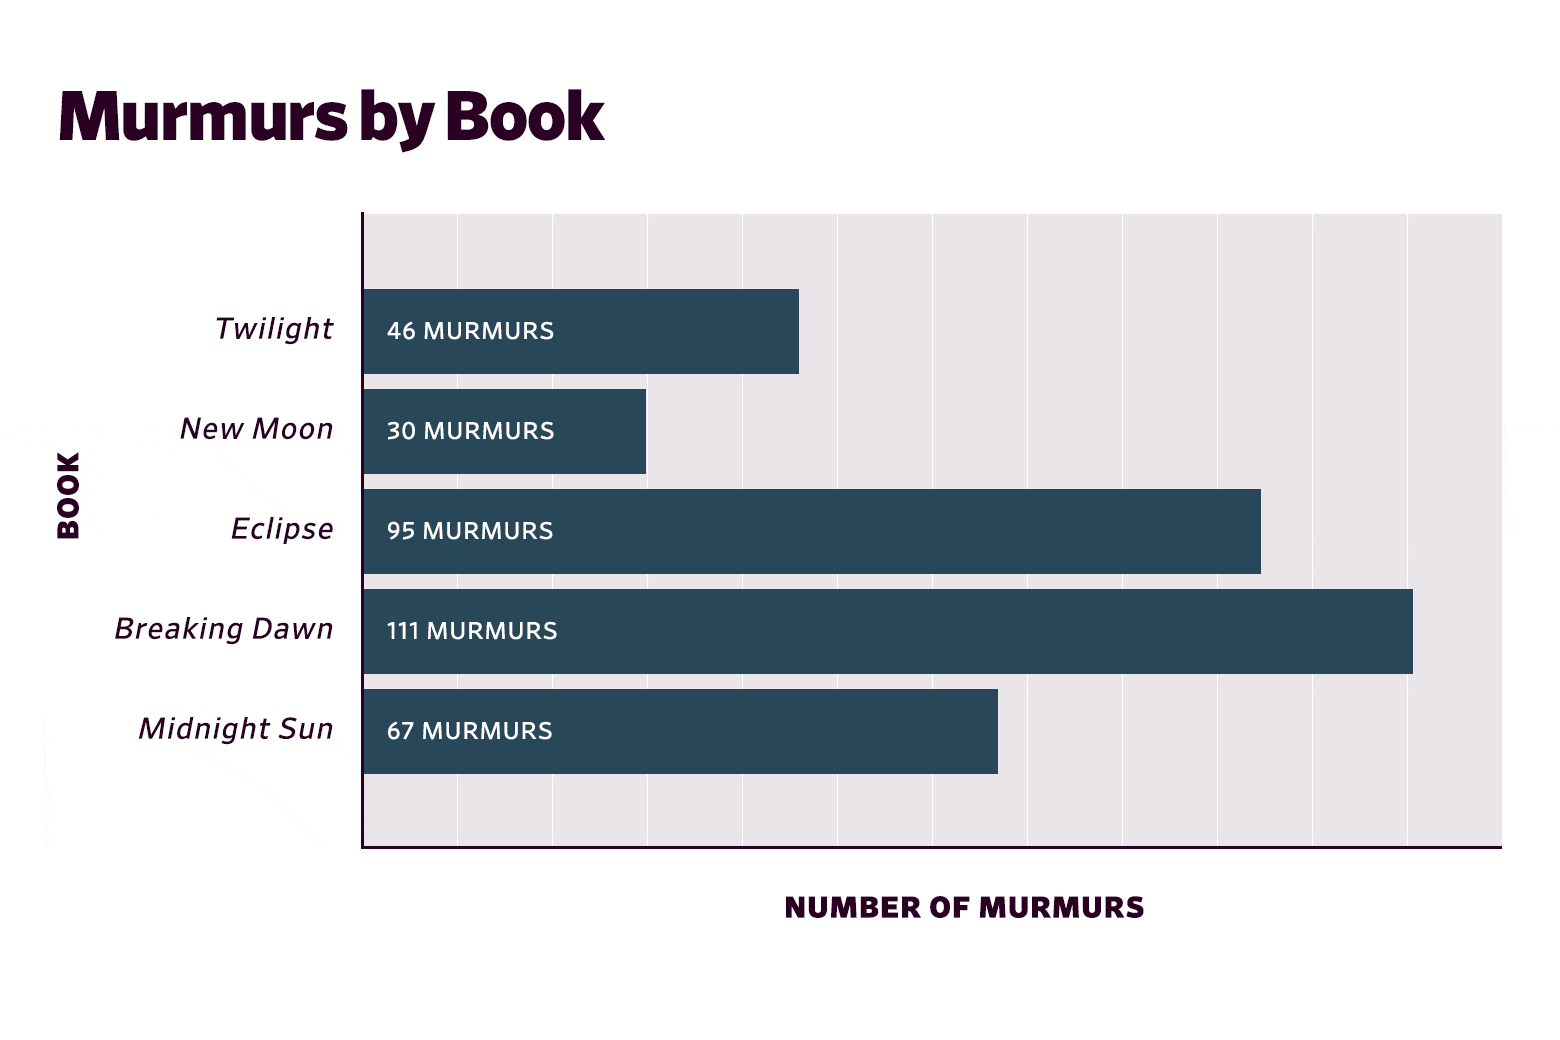 A horizontal bar chart shows that Twilight has 46 murmurs, New Moon has 30 murmurs, Eclipse has 95 murmurs, Breaking Dawn has 111 murmurs, and Midnight Sun has 67 murmurs.